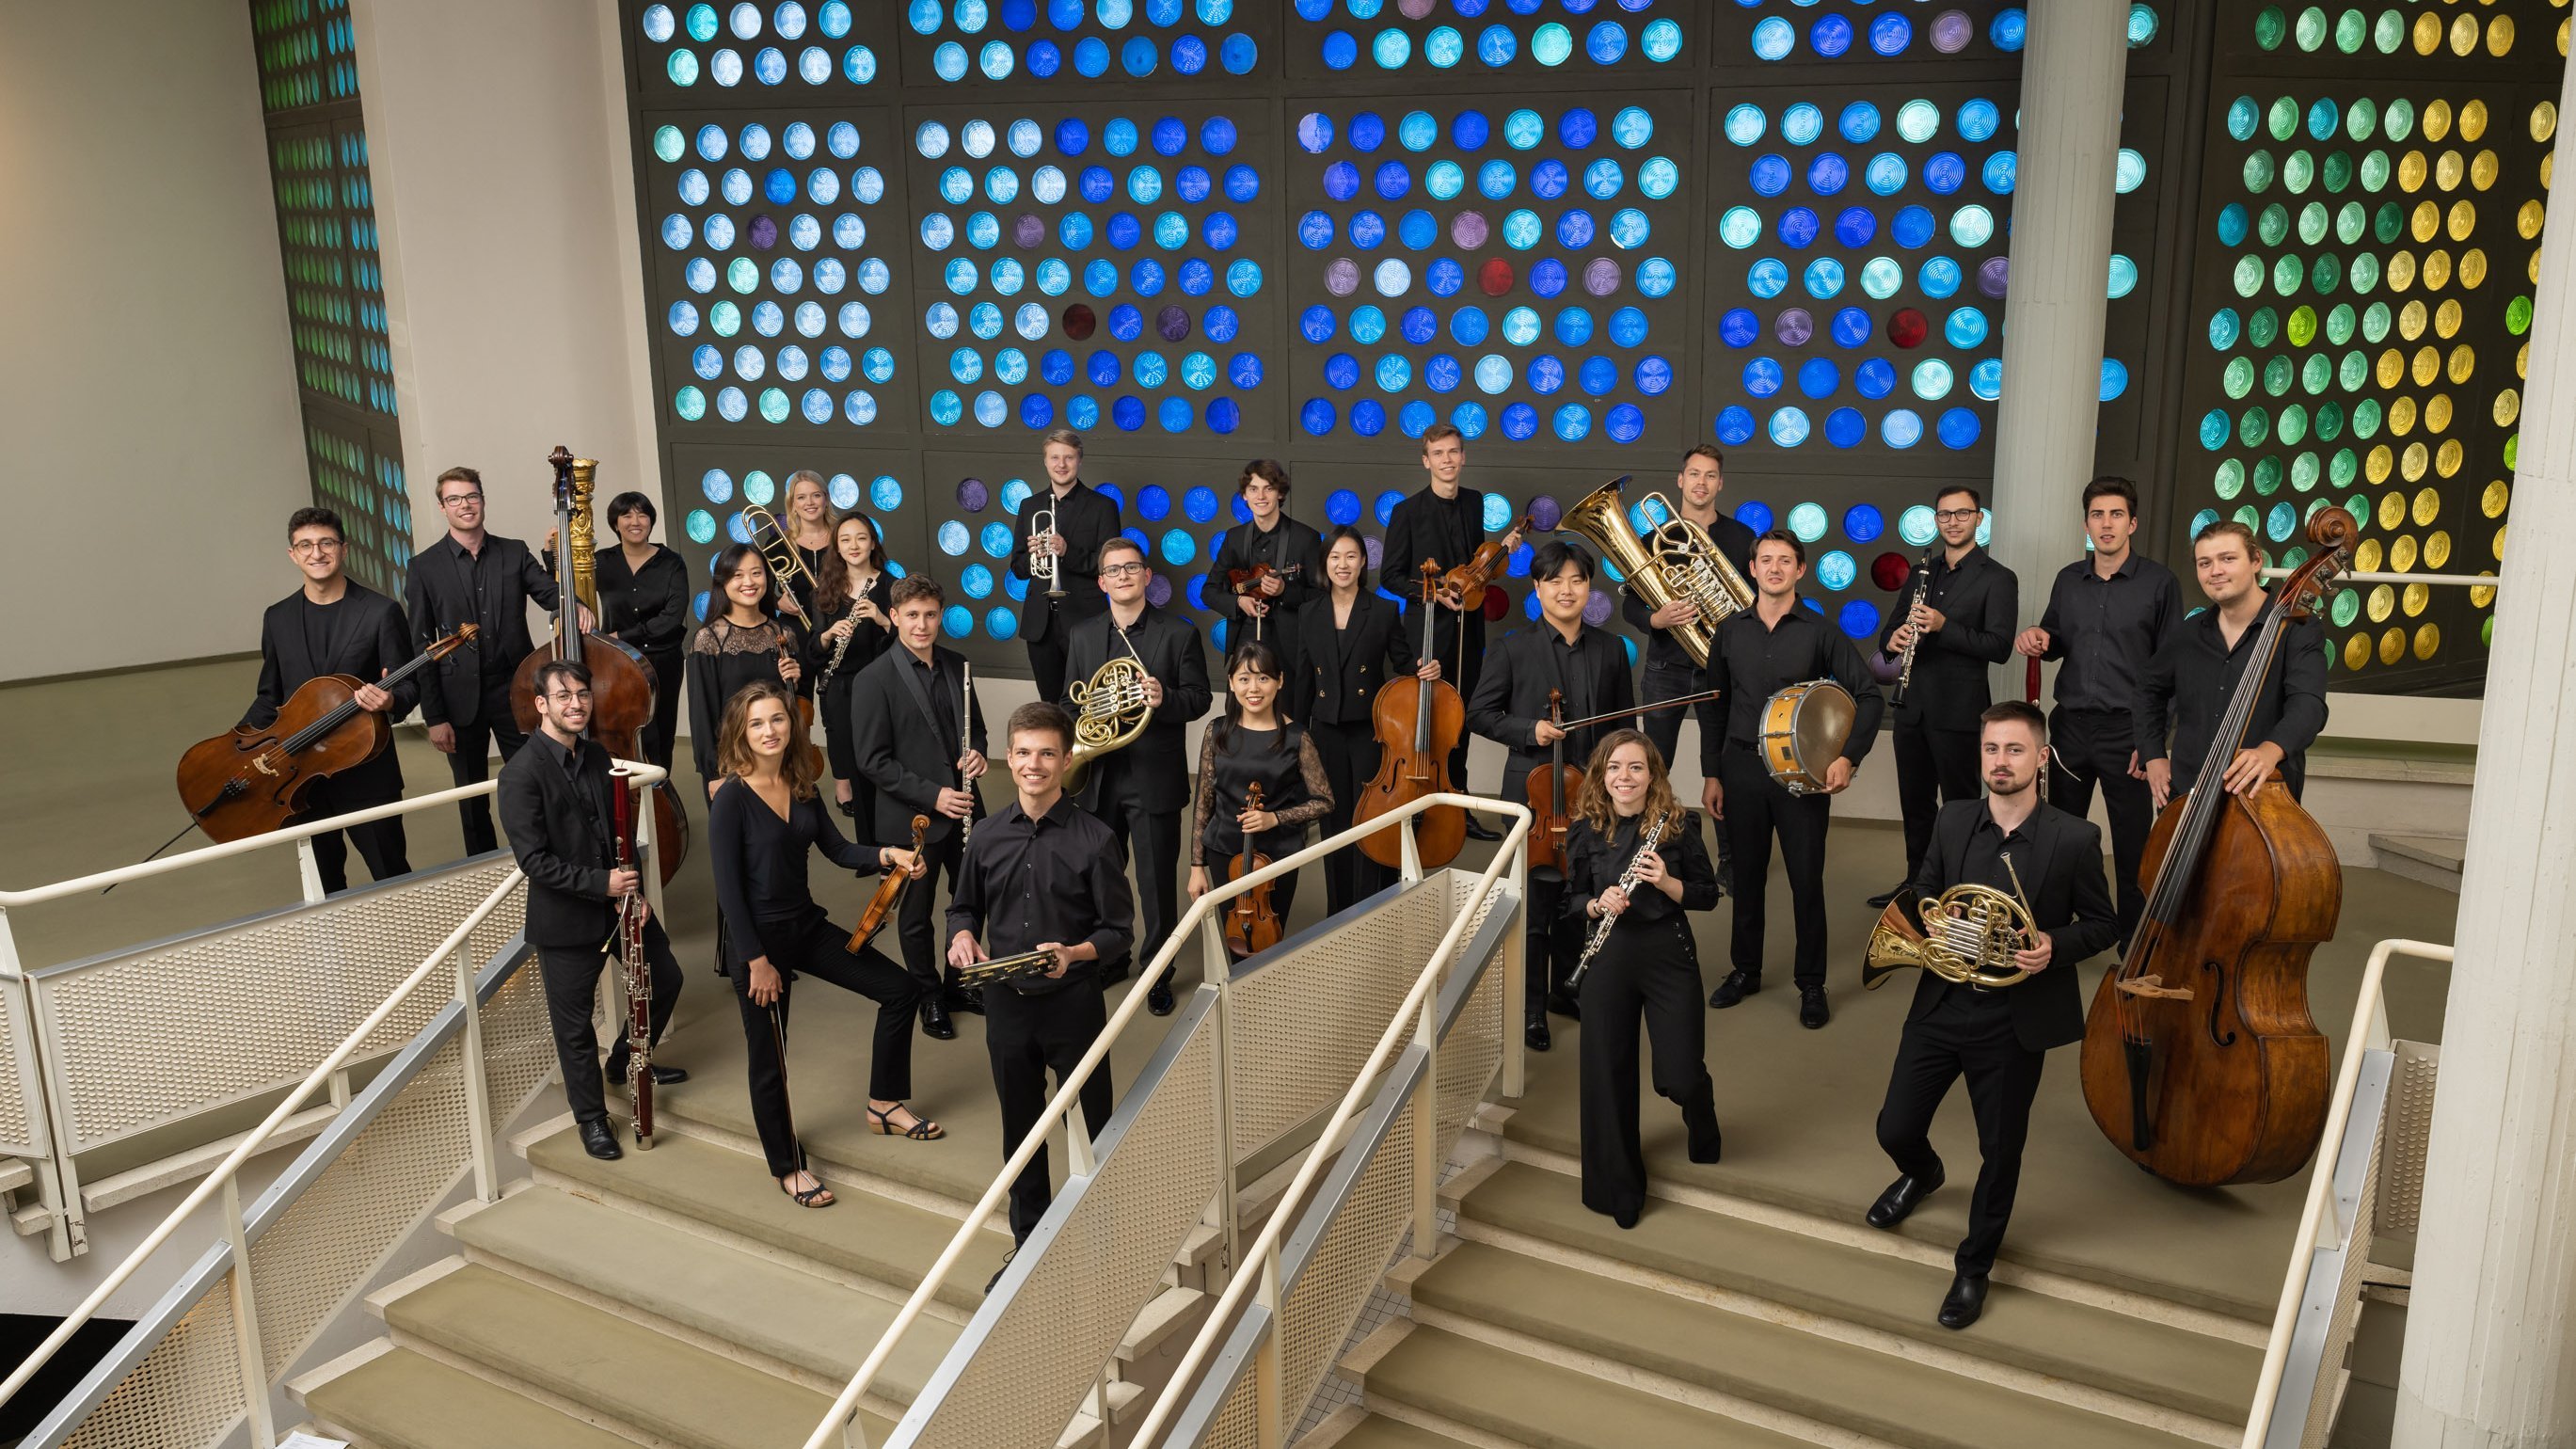 Group photo of the Karajan-Akademie.